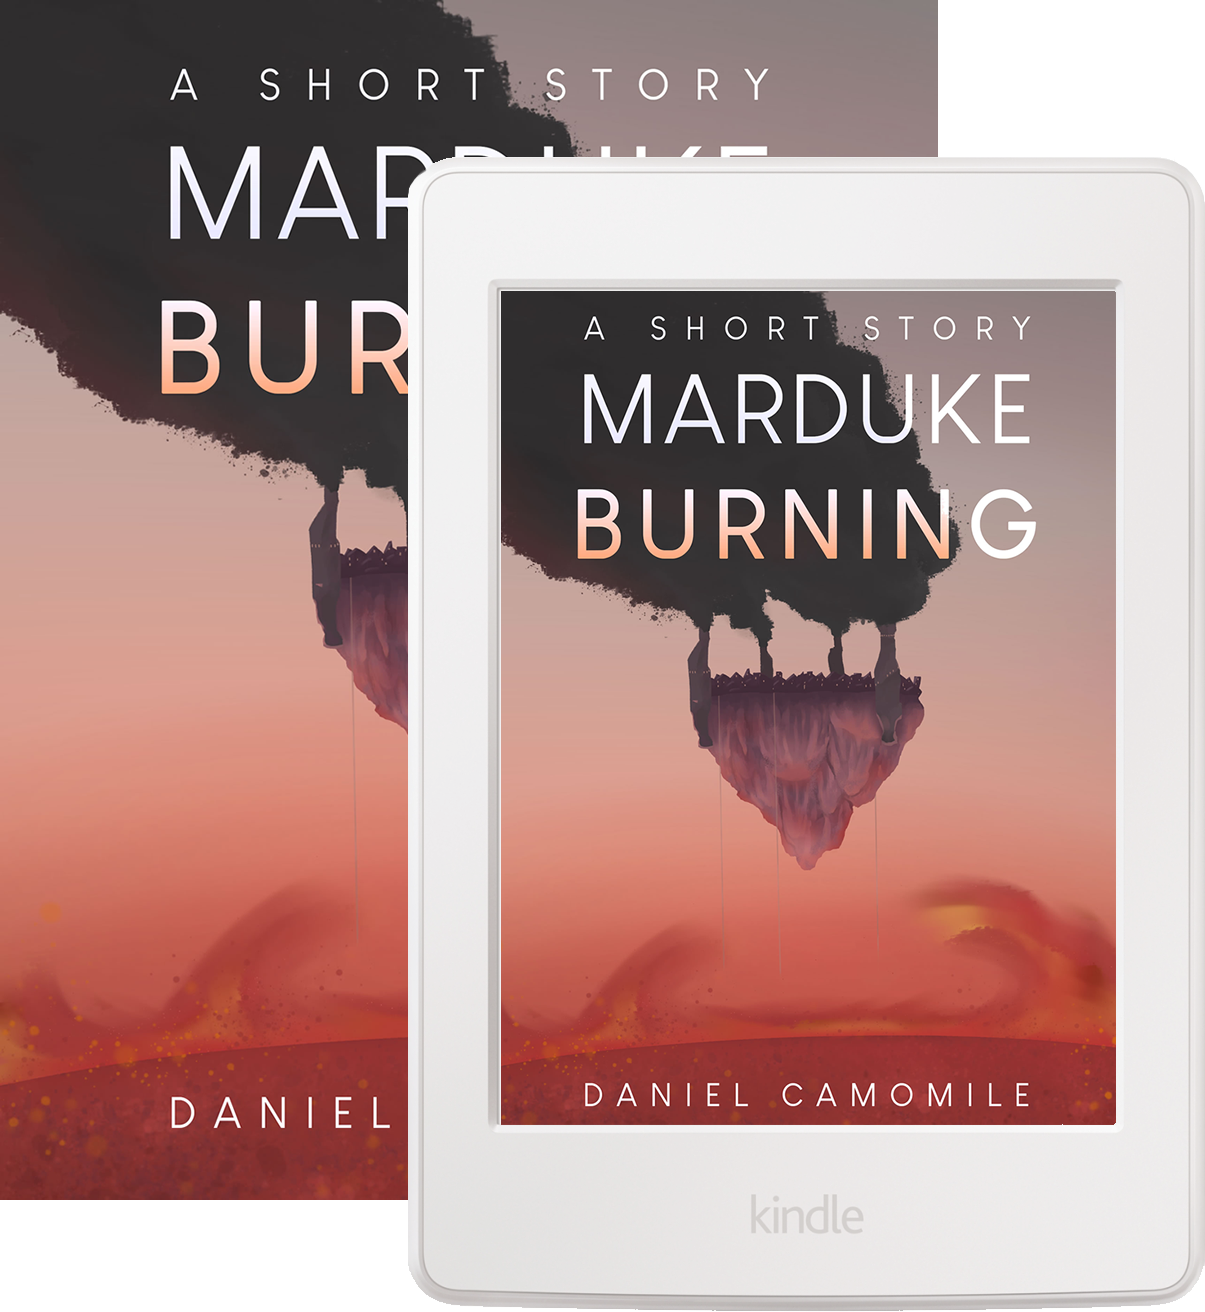 Marduke Burning Christian Dystopia Short Story